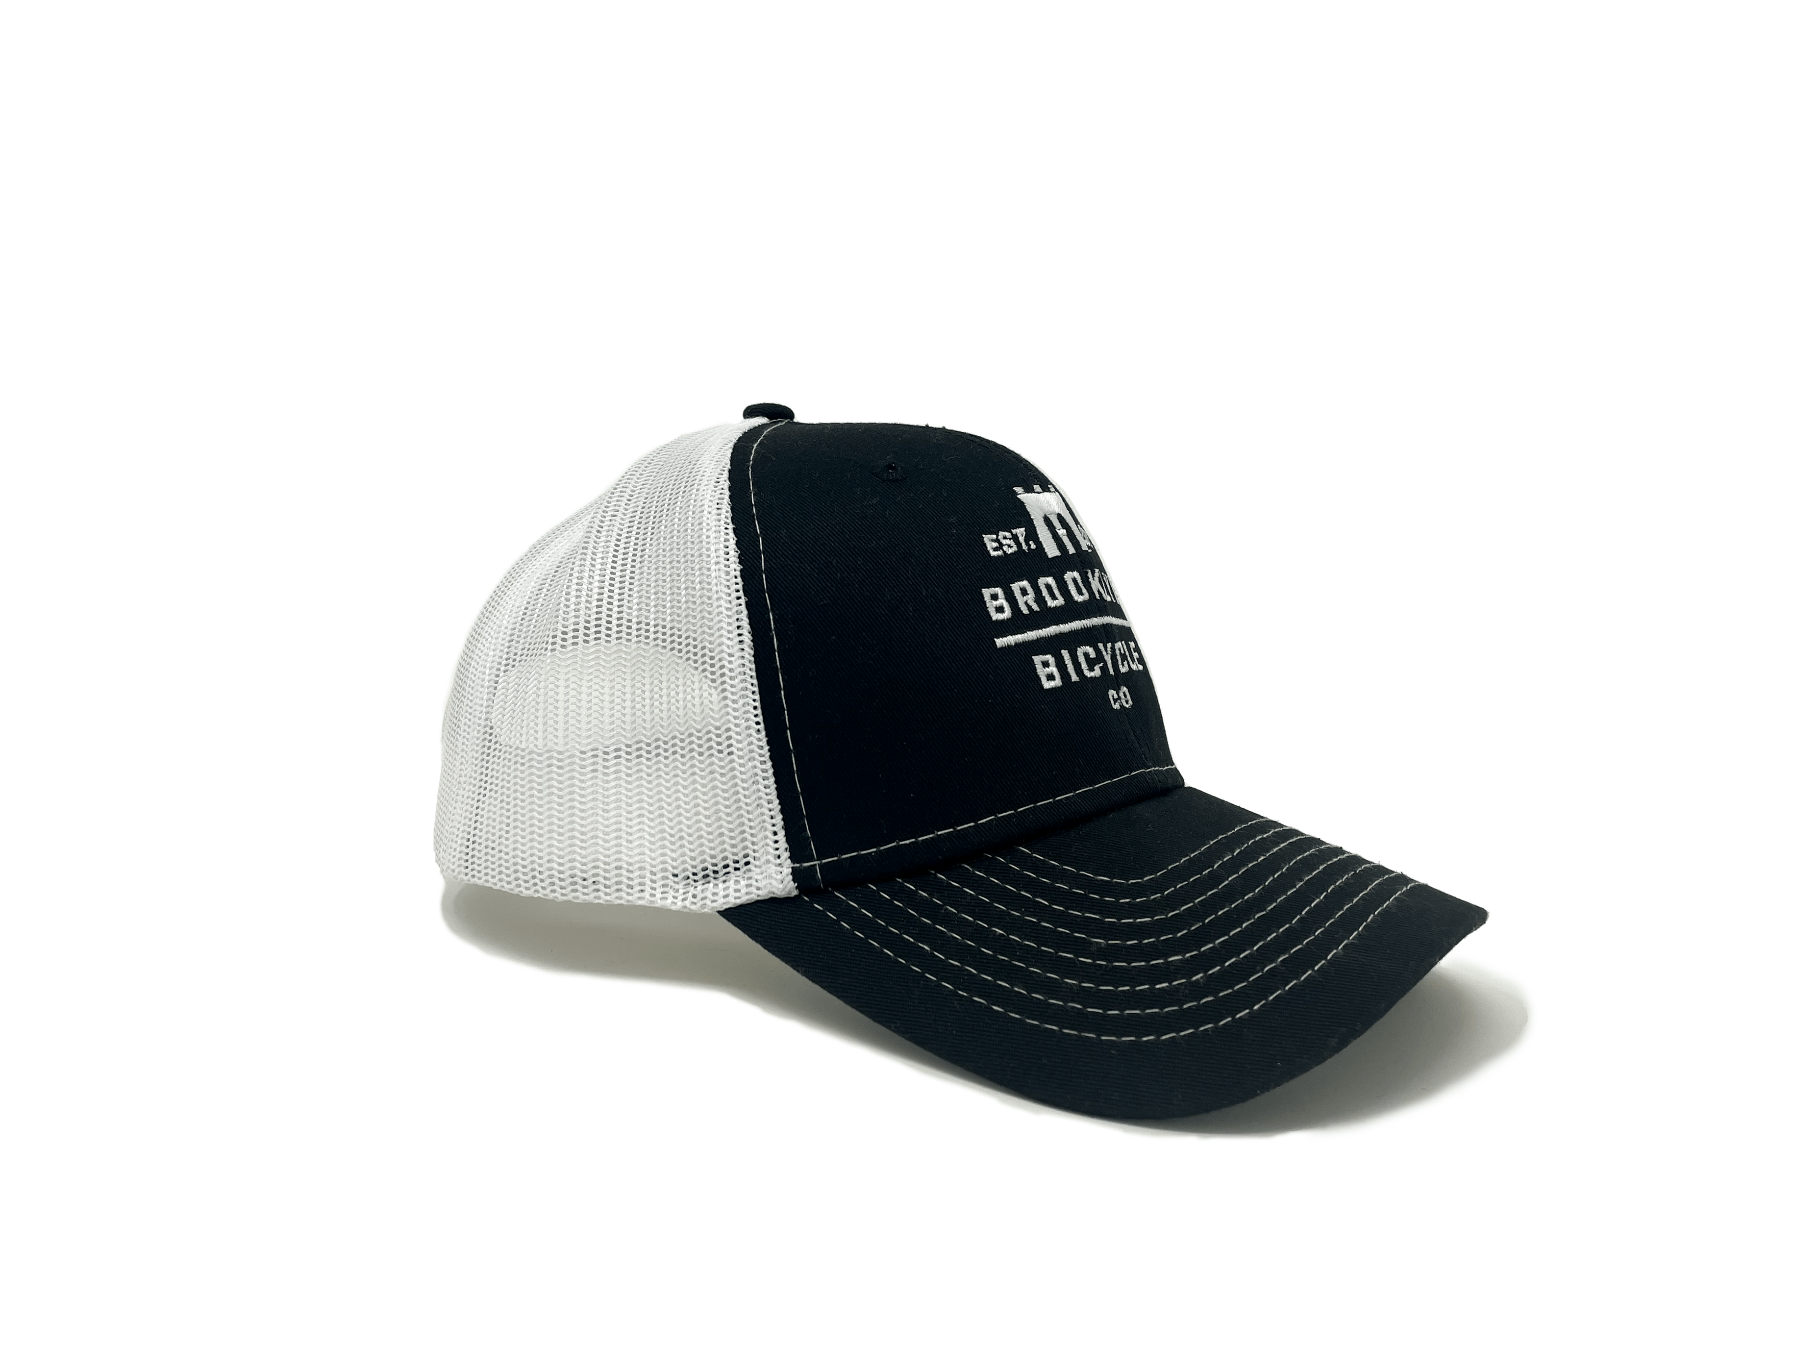 Brooklyn Bicycle Co. Trucker Cap Black/White CAP-BLKWHT